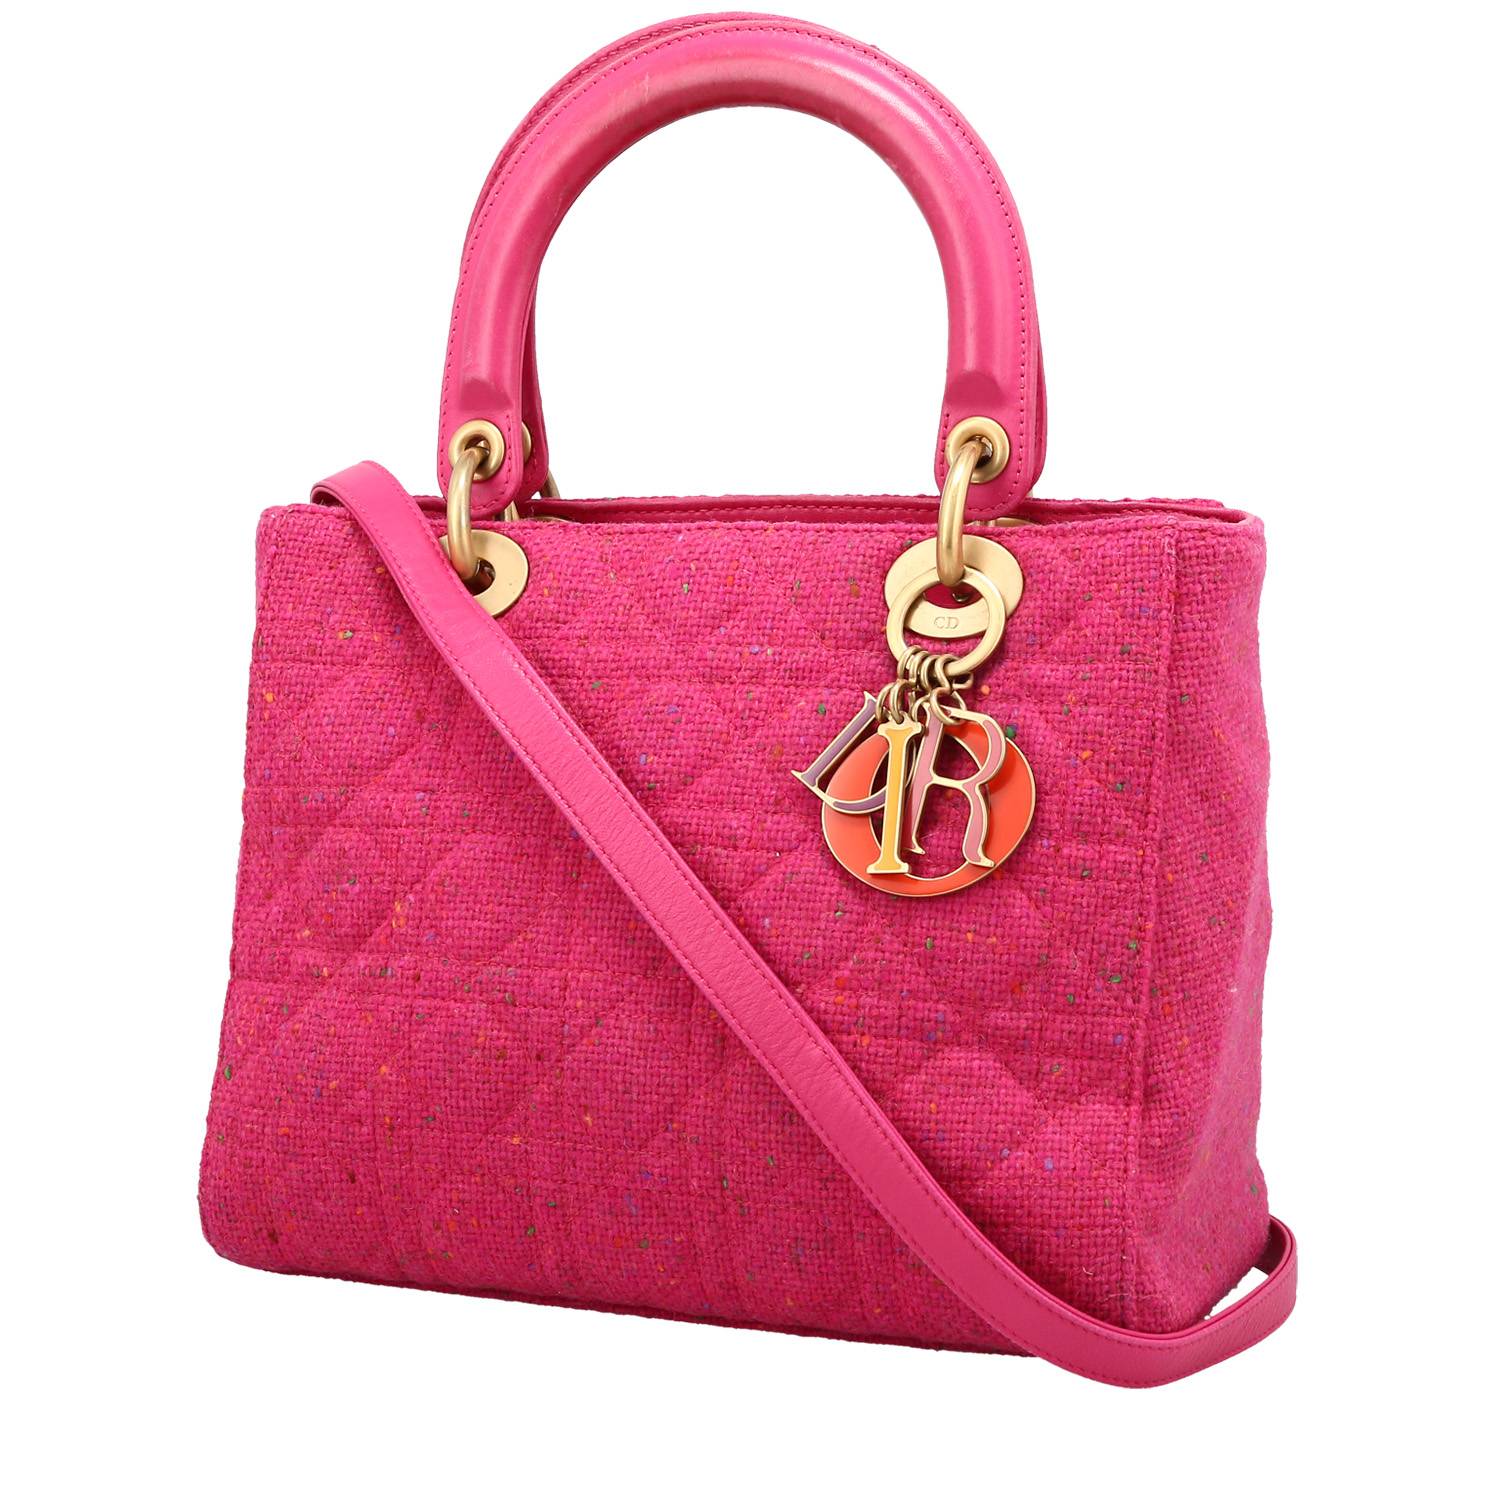 sac à main dior lady dior moyen modèle en lainage rose-fushia et